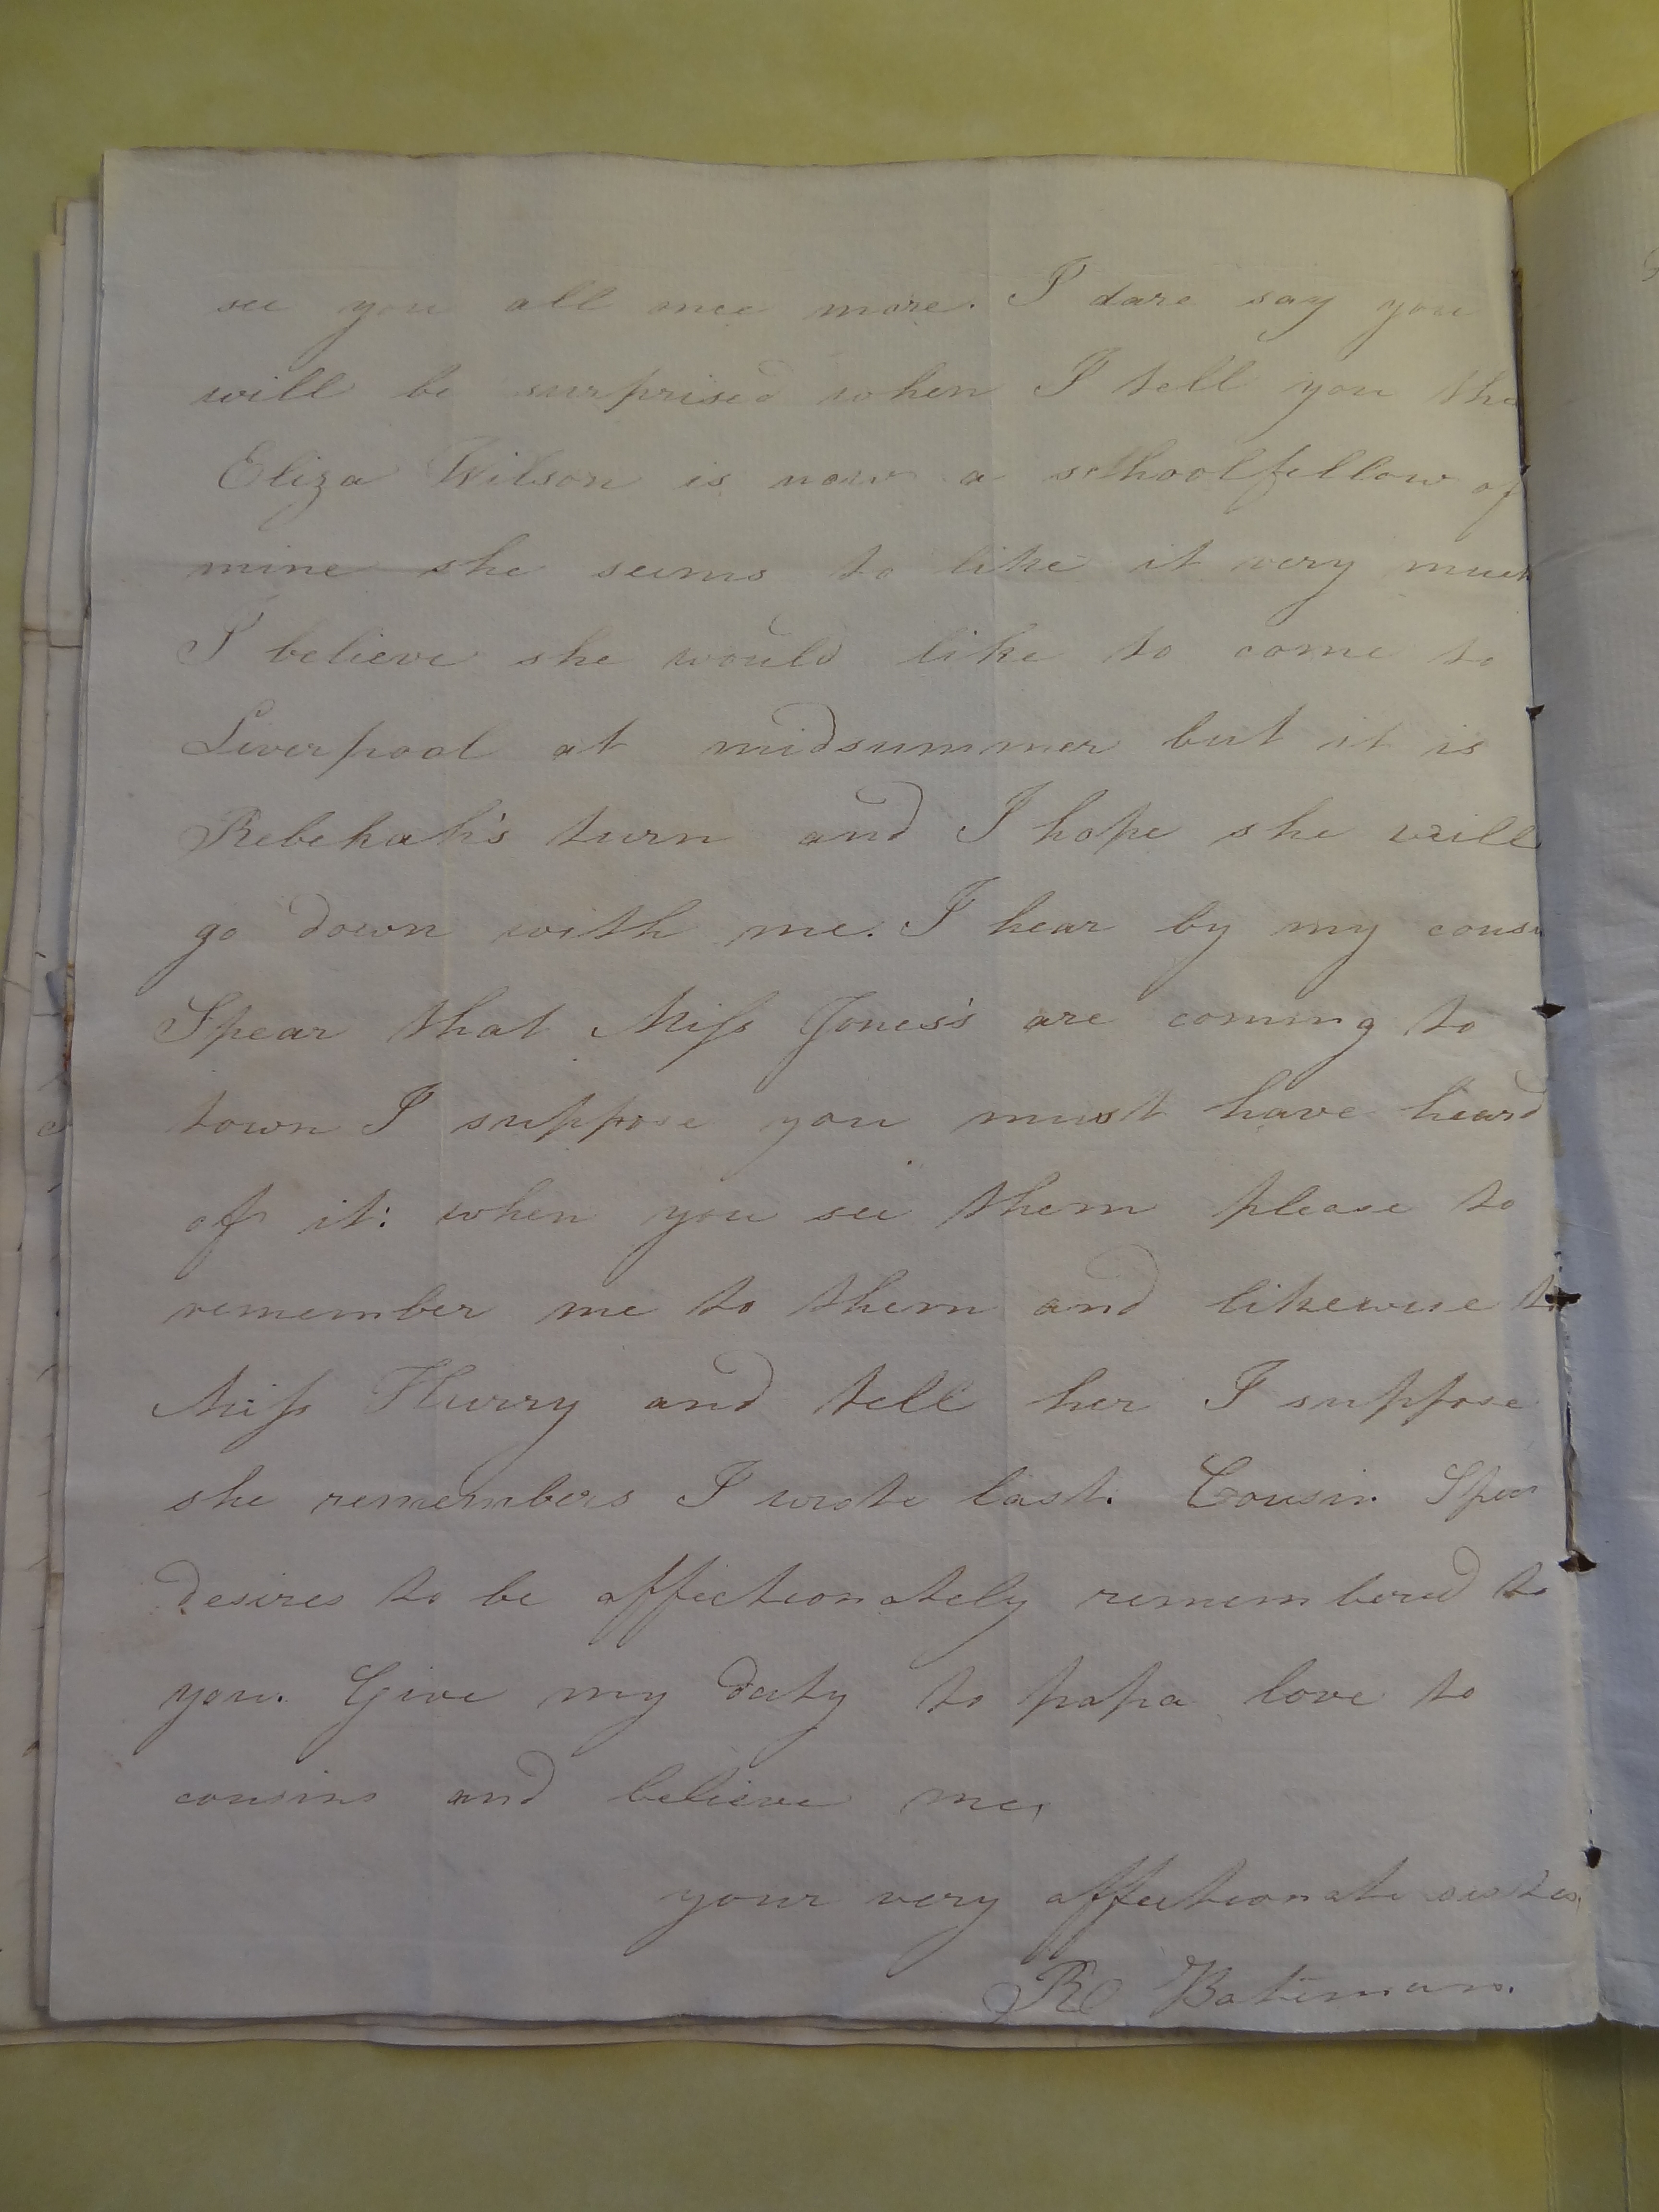 Image #2 of letter: Rebekah Hope to Thomas Bateman (junior), undated